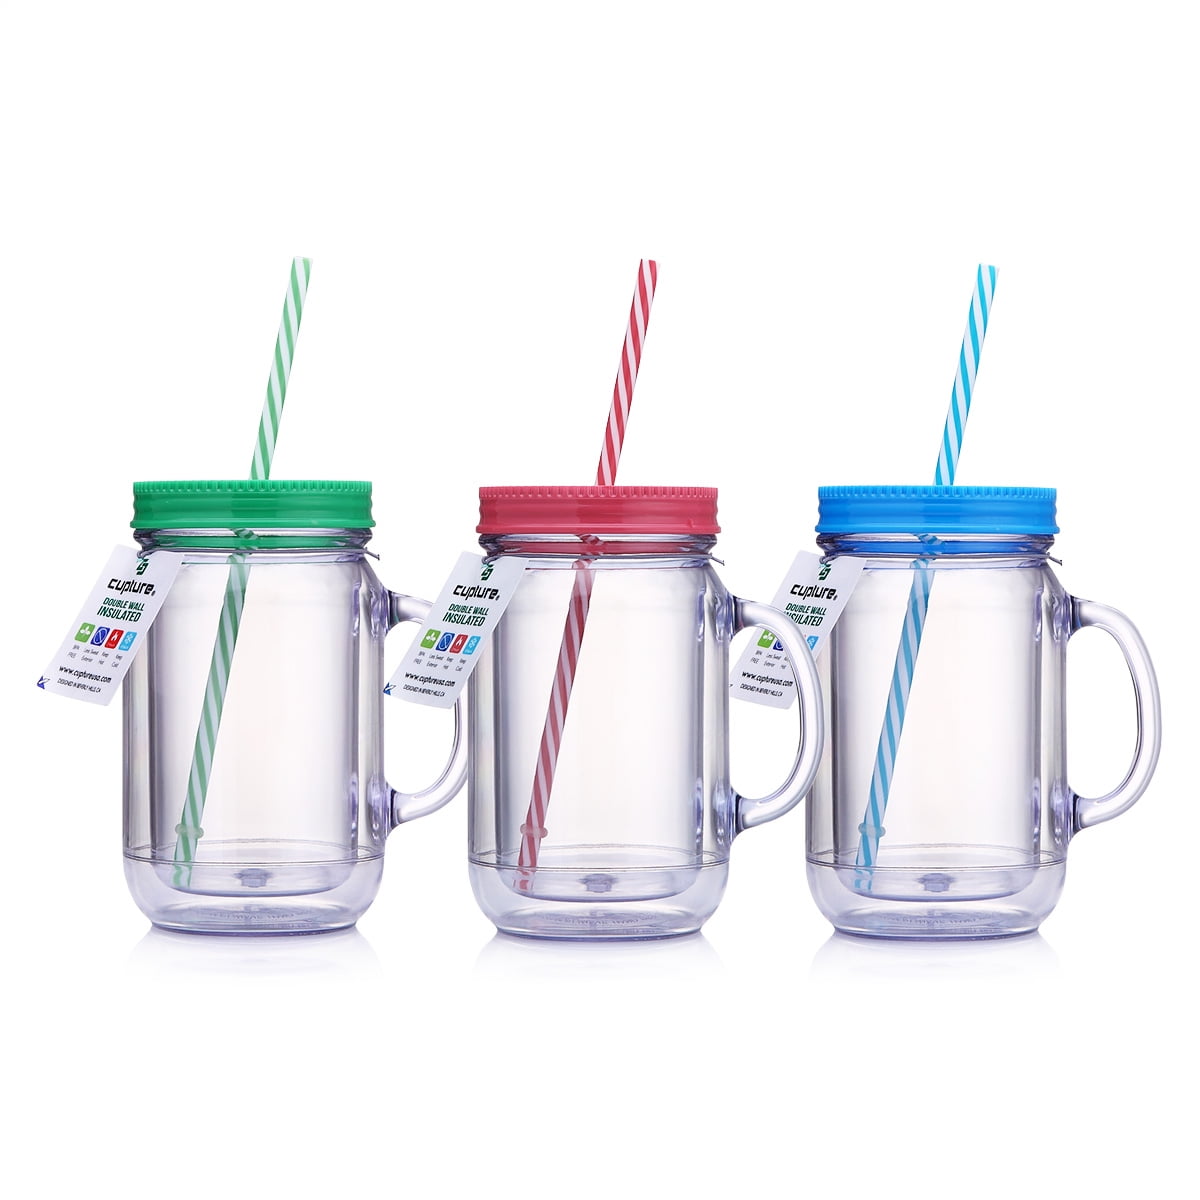 Straw and Handle with Fun Floating Confetti Large Break Resistant Tri-Coastal Design Plastic Mason Jar Mug BPA Free Cup with Lid